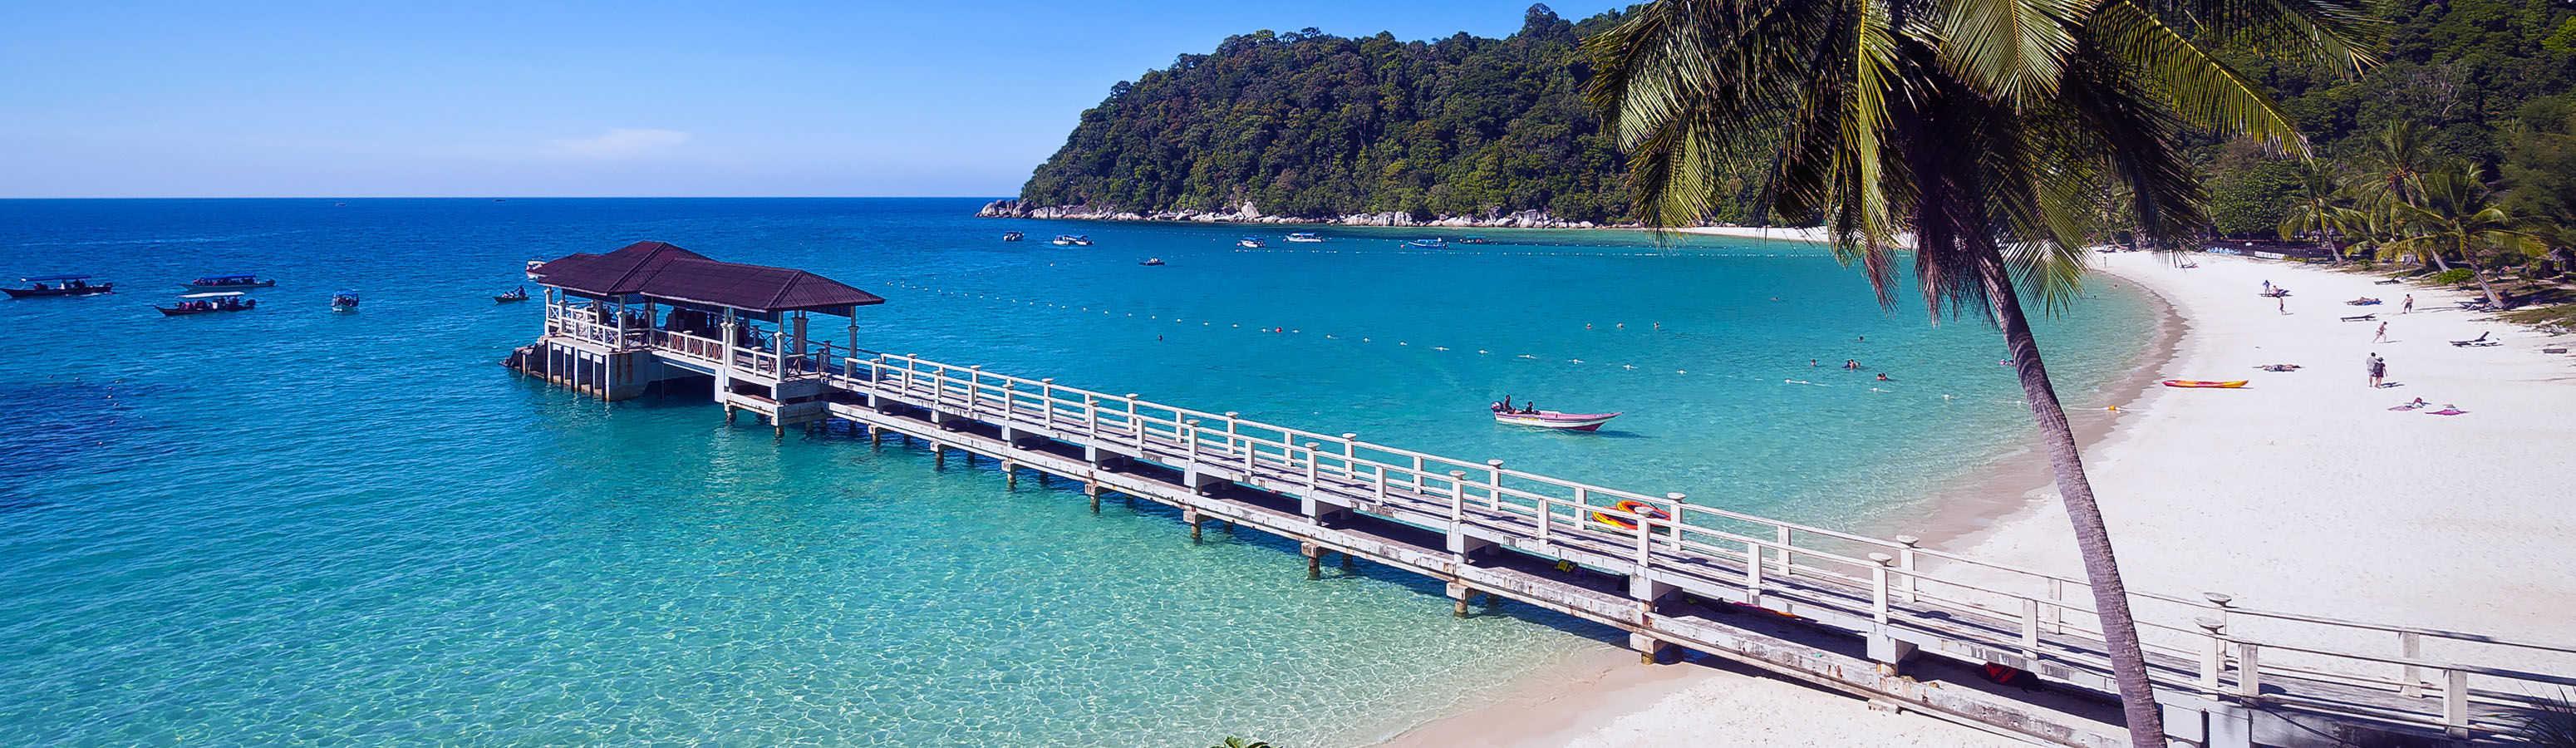 Experience the perfect sunbath on the Seribuat archipelago